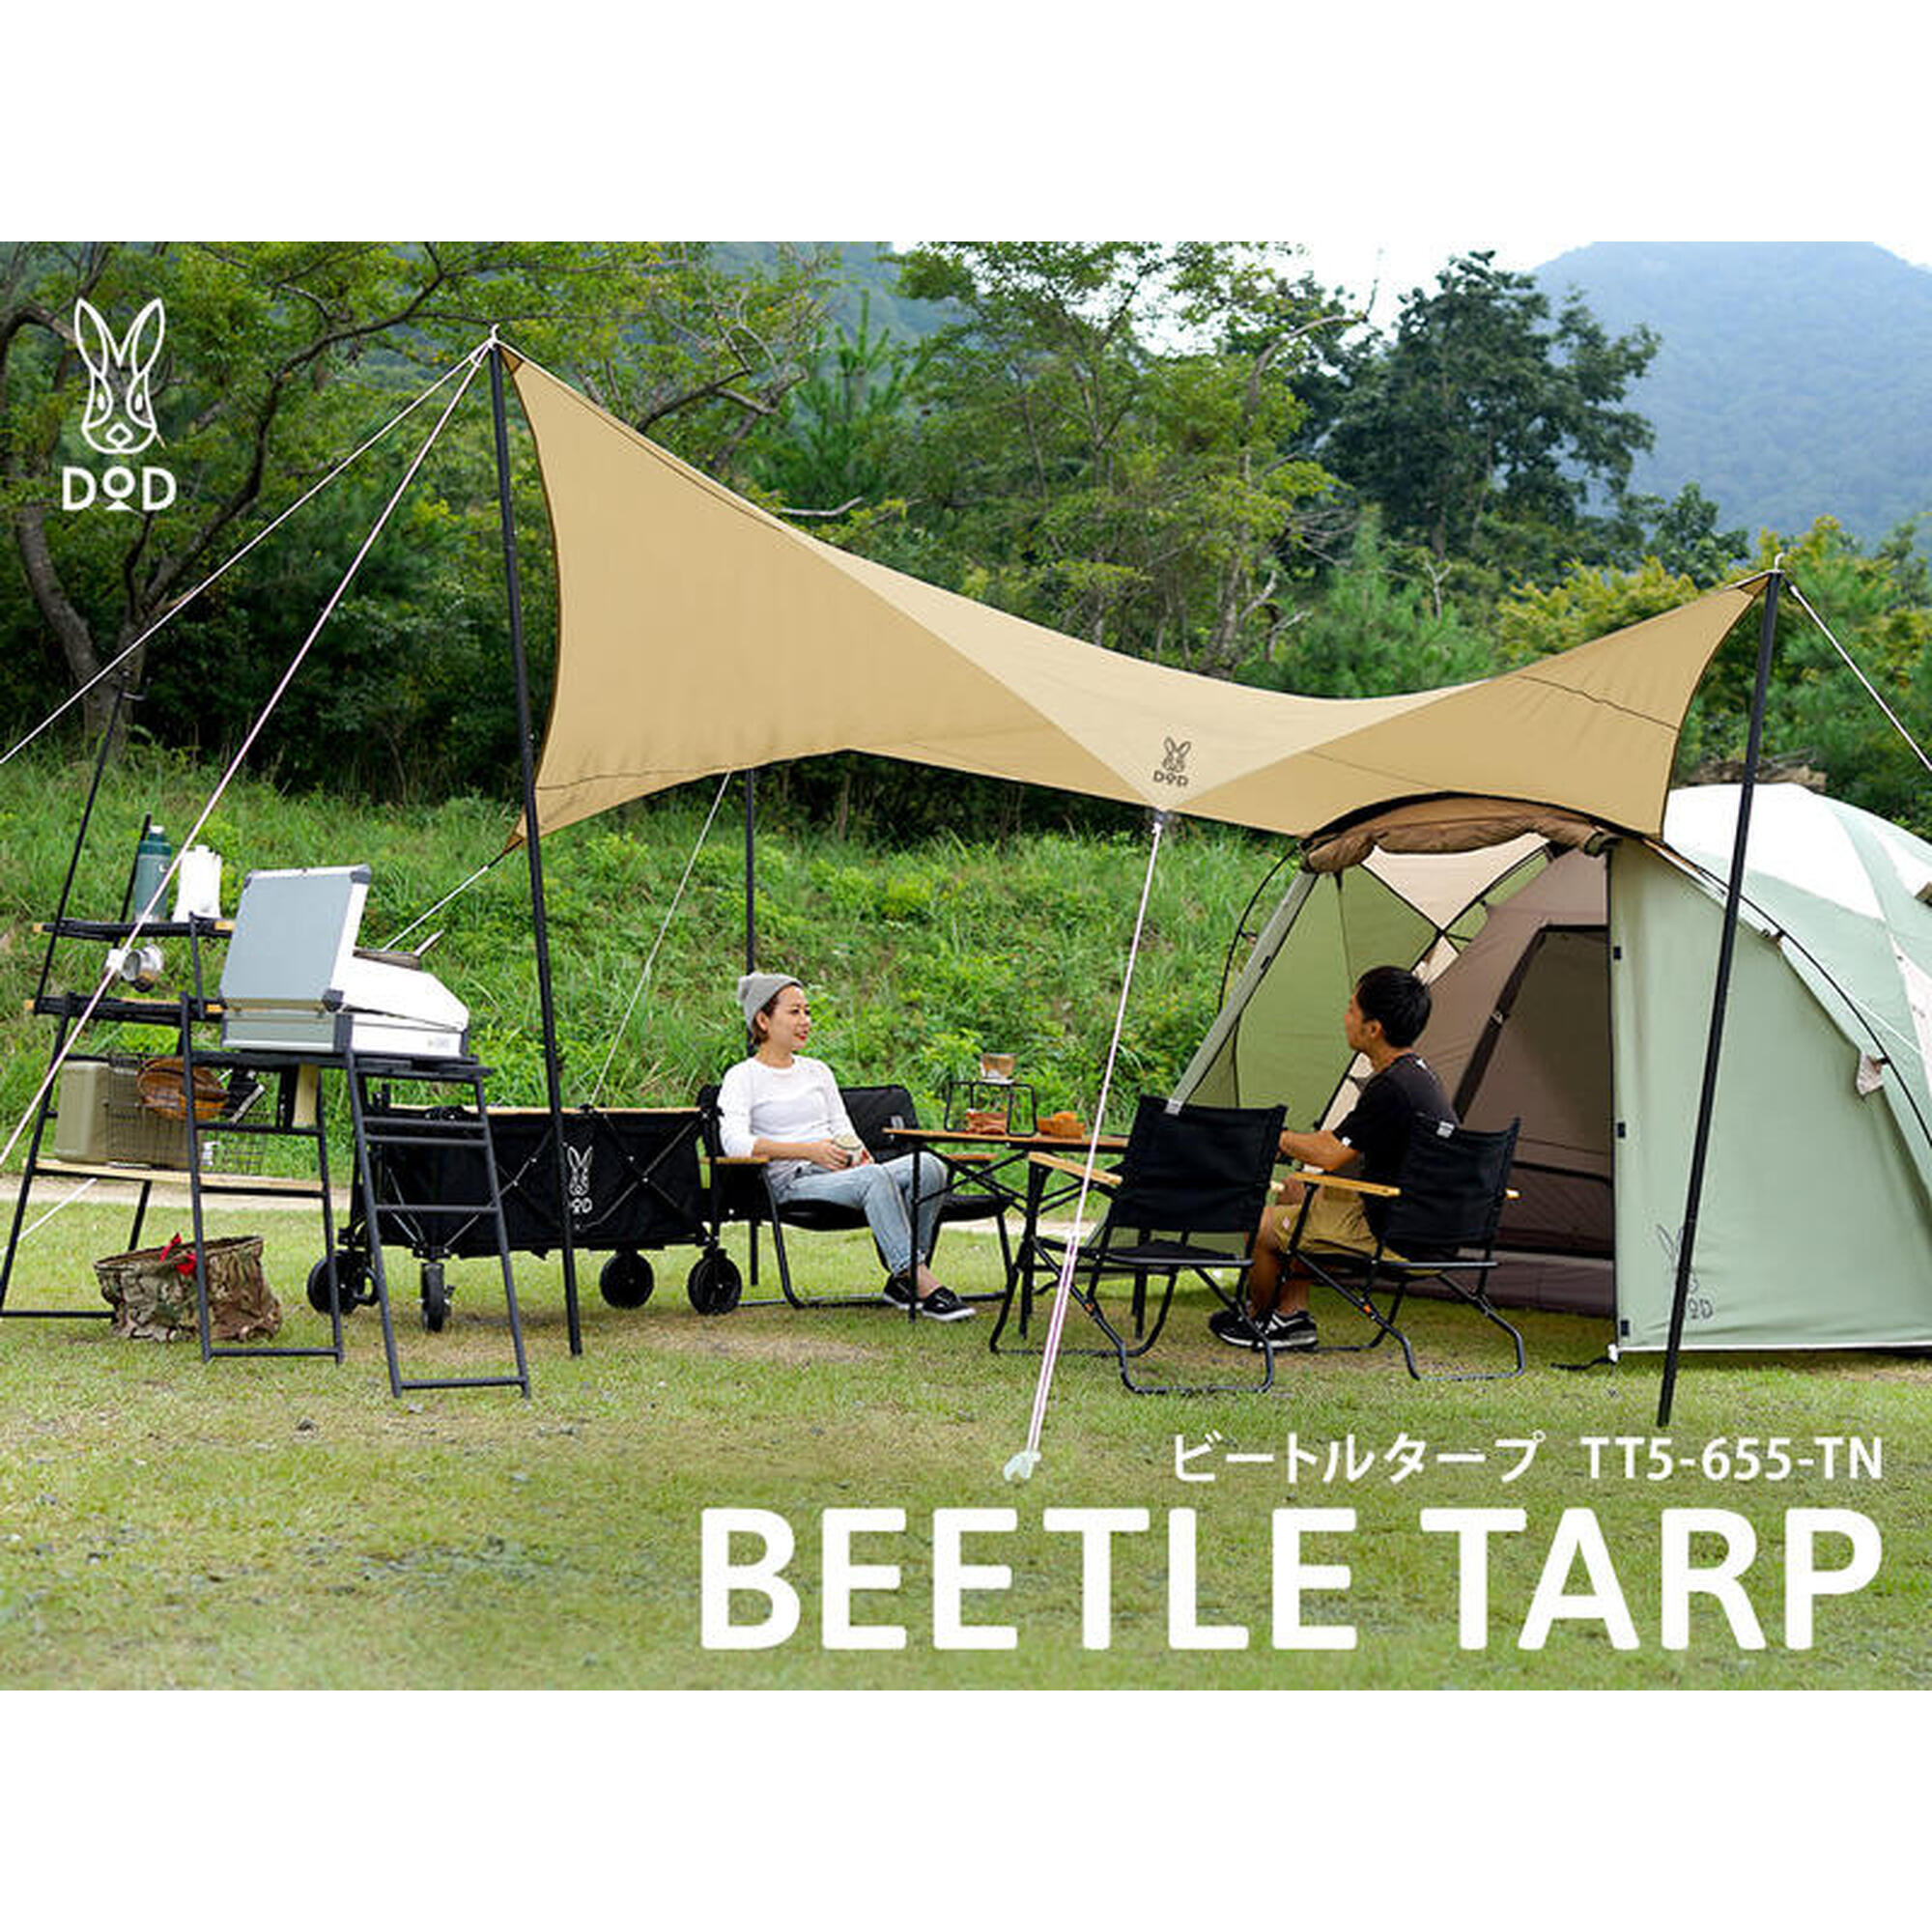 Beetle Tarp TT5-655-TN 露營天幕 - 棕褐色